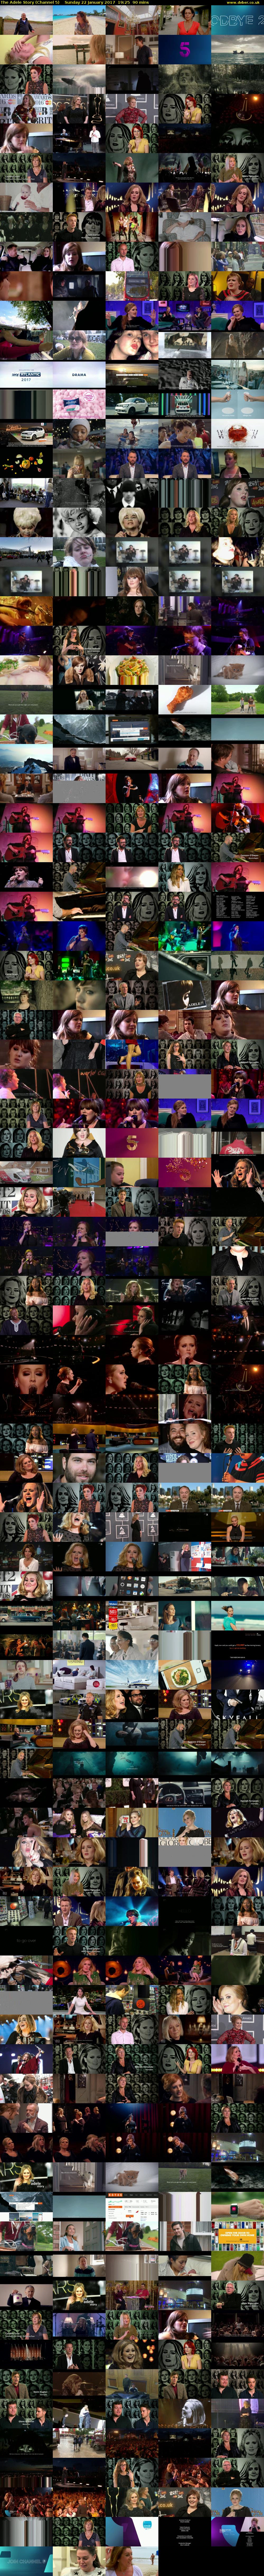 The Adele Story (Channel 5) Sunday 22 January 2017 19:25 - 20:55